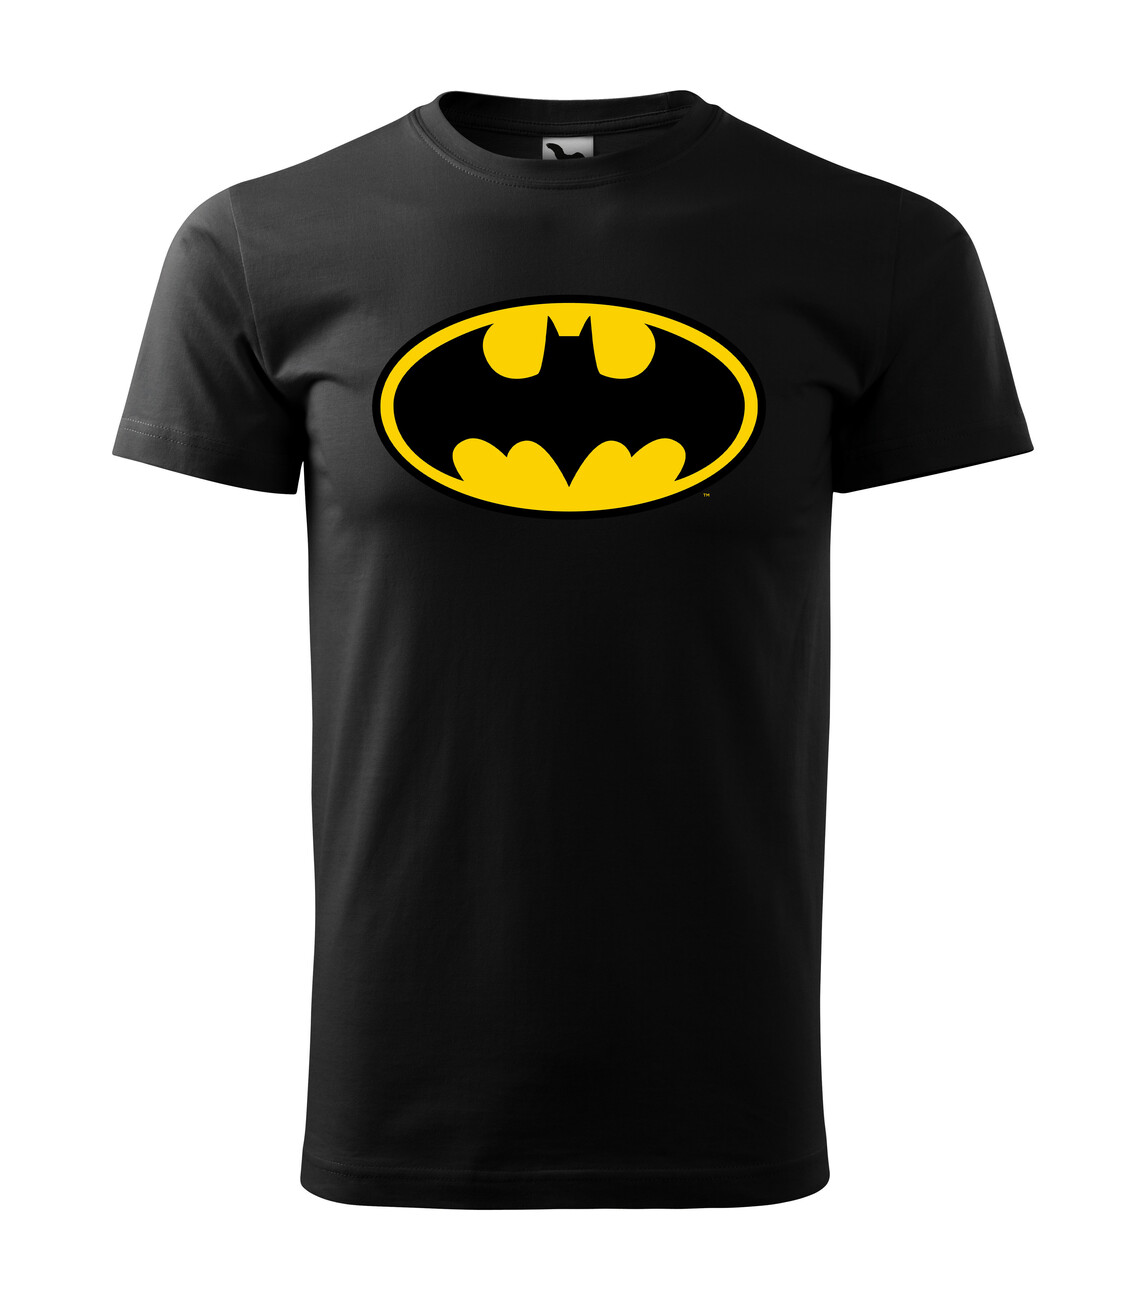 Batman - Logo | Clothes and accessories for merchandise fans